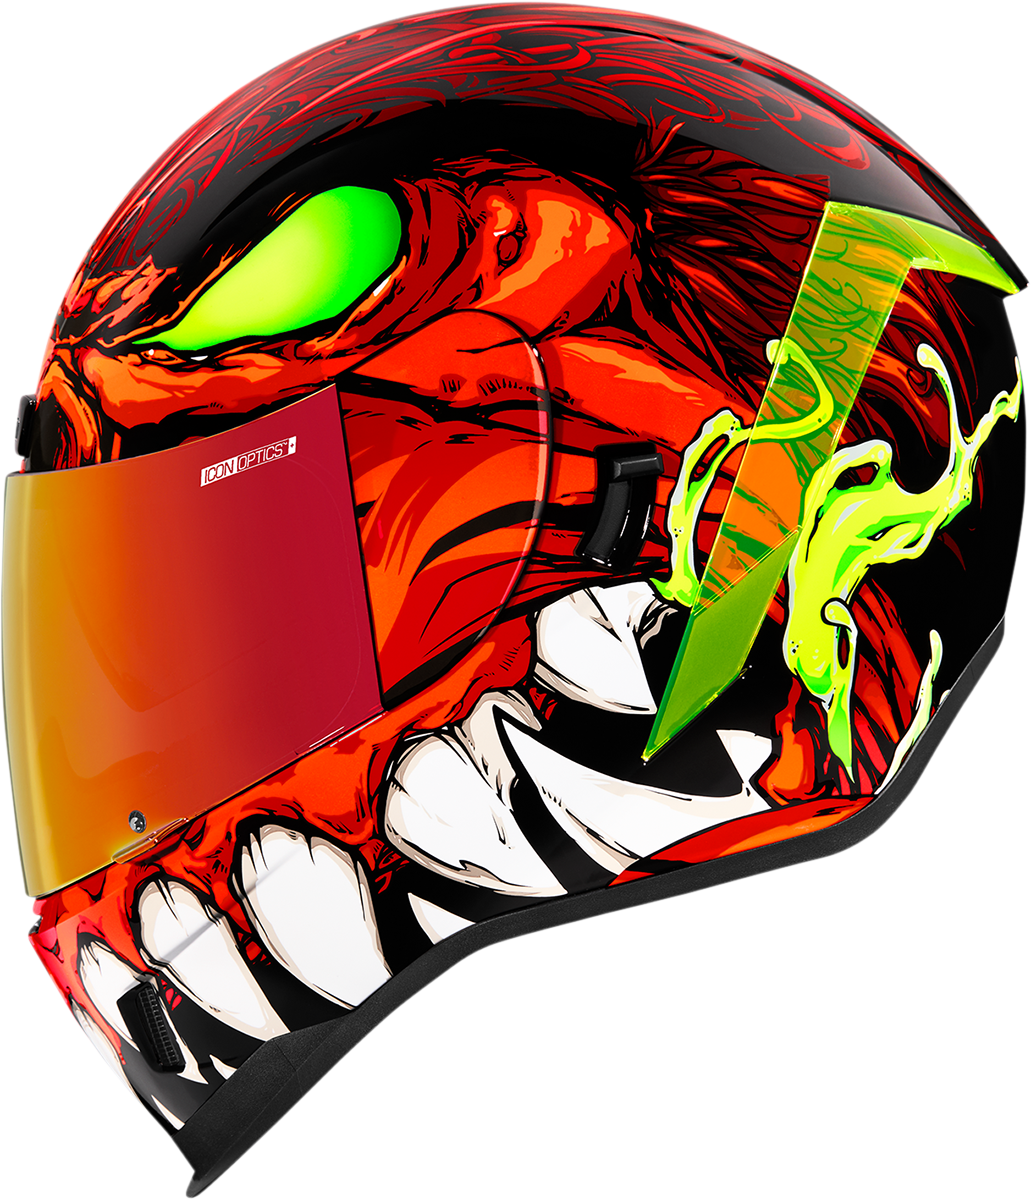 ICON Airform™ Helmet - Manik'R - Red - Small 0101-13876